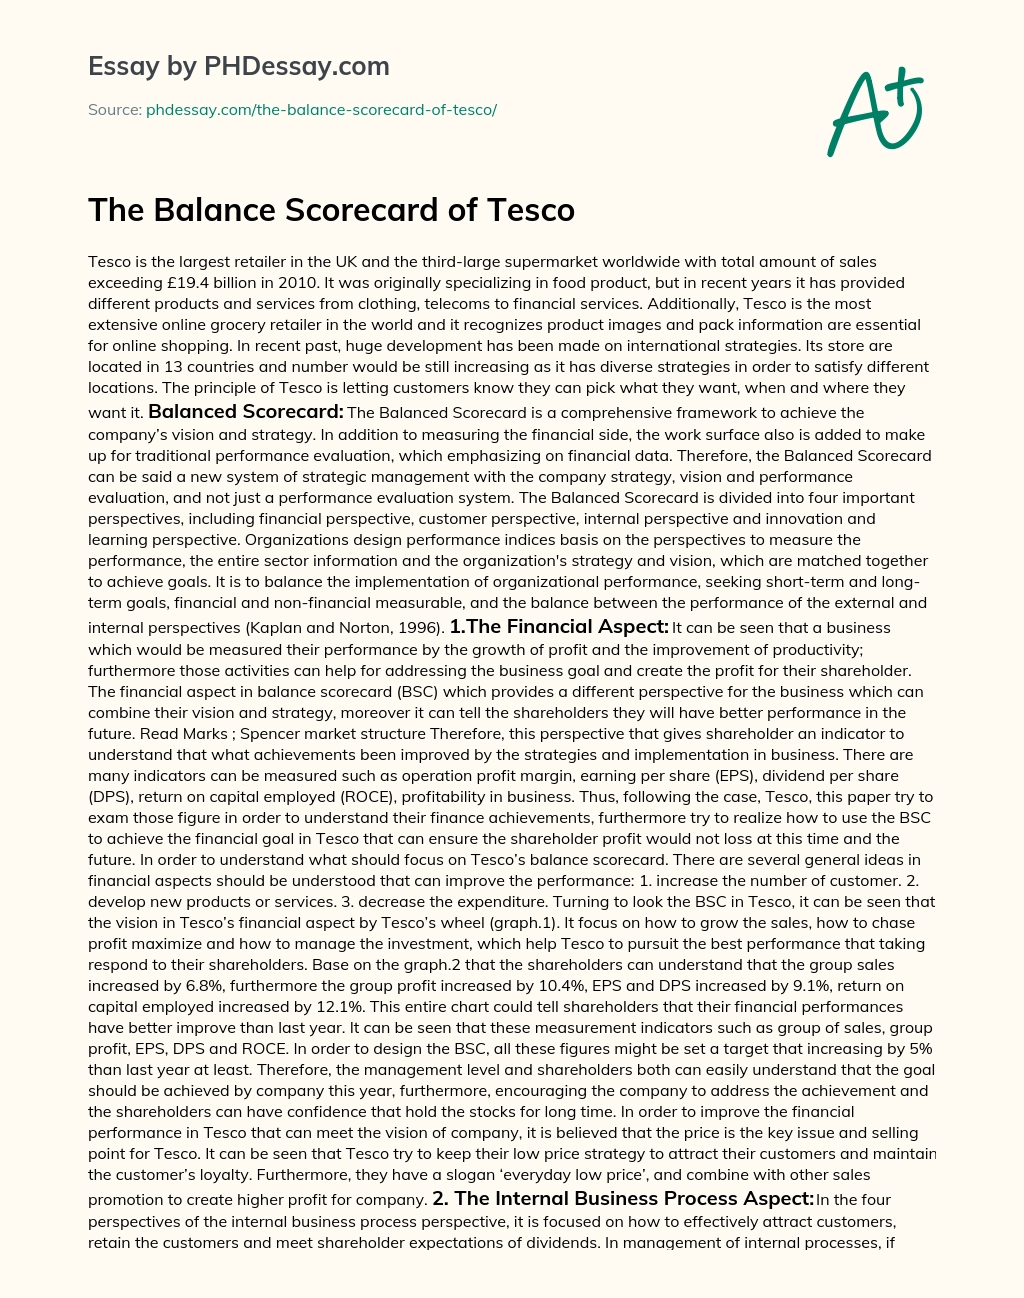 The Balance Scorecard of Tesco essay